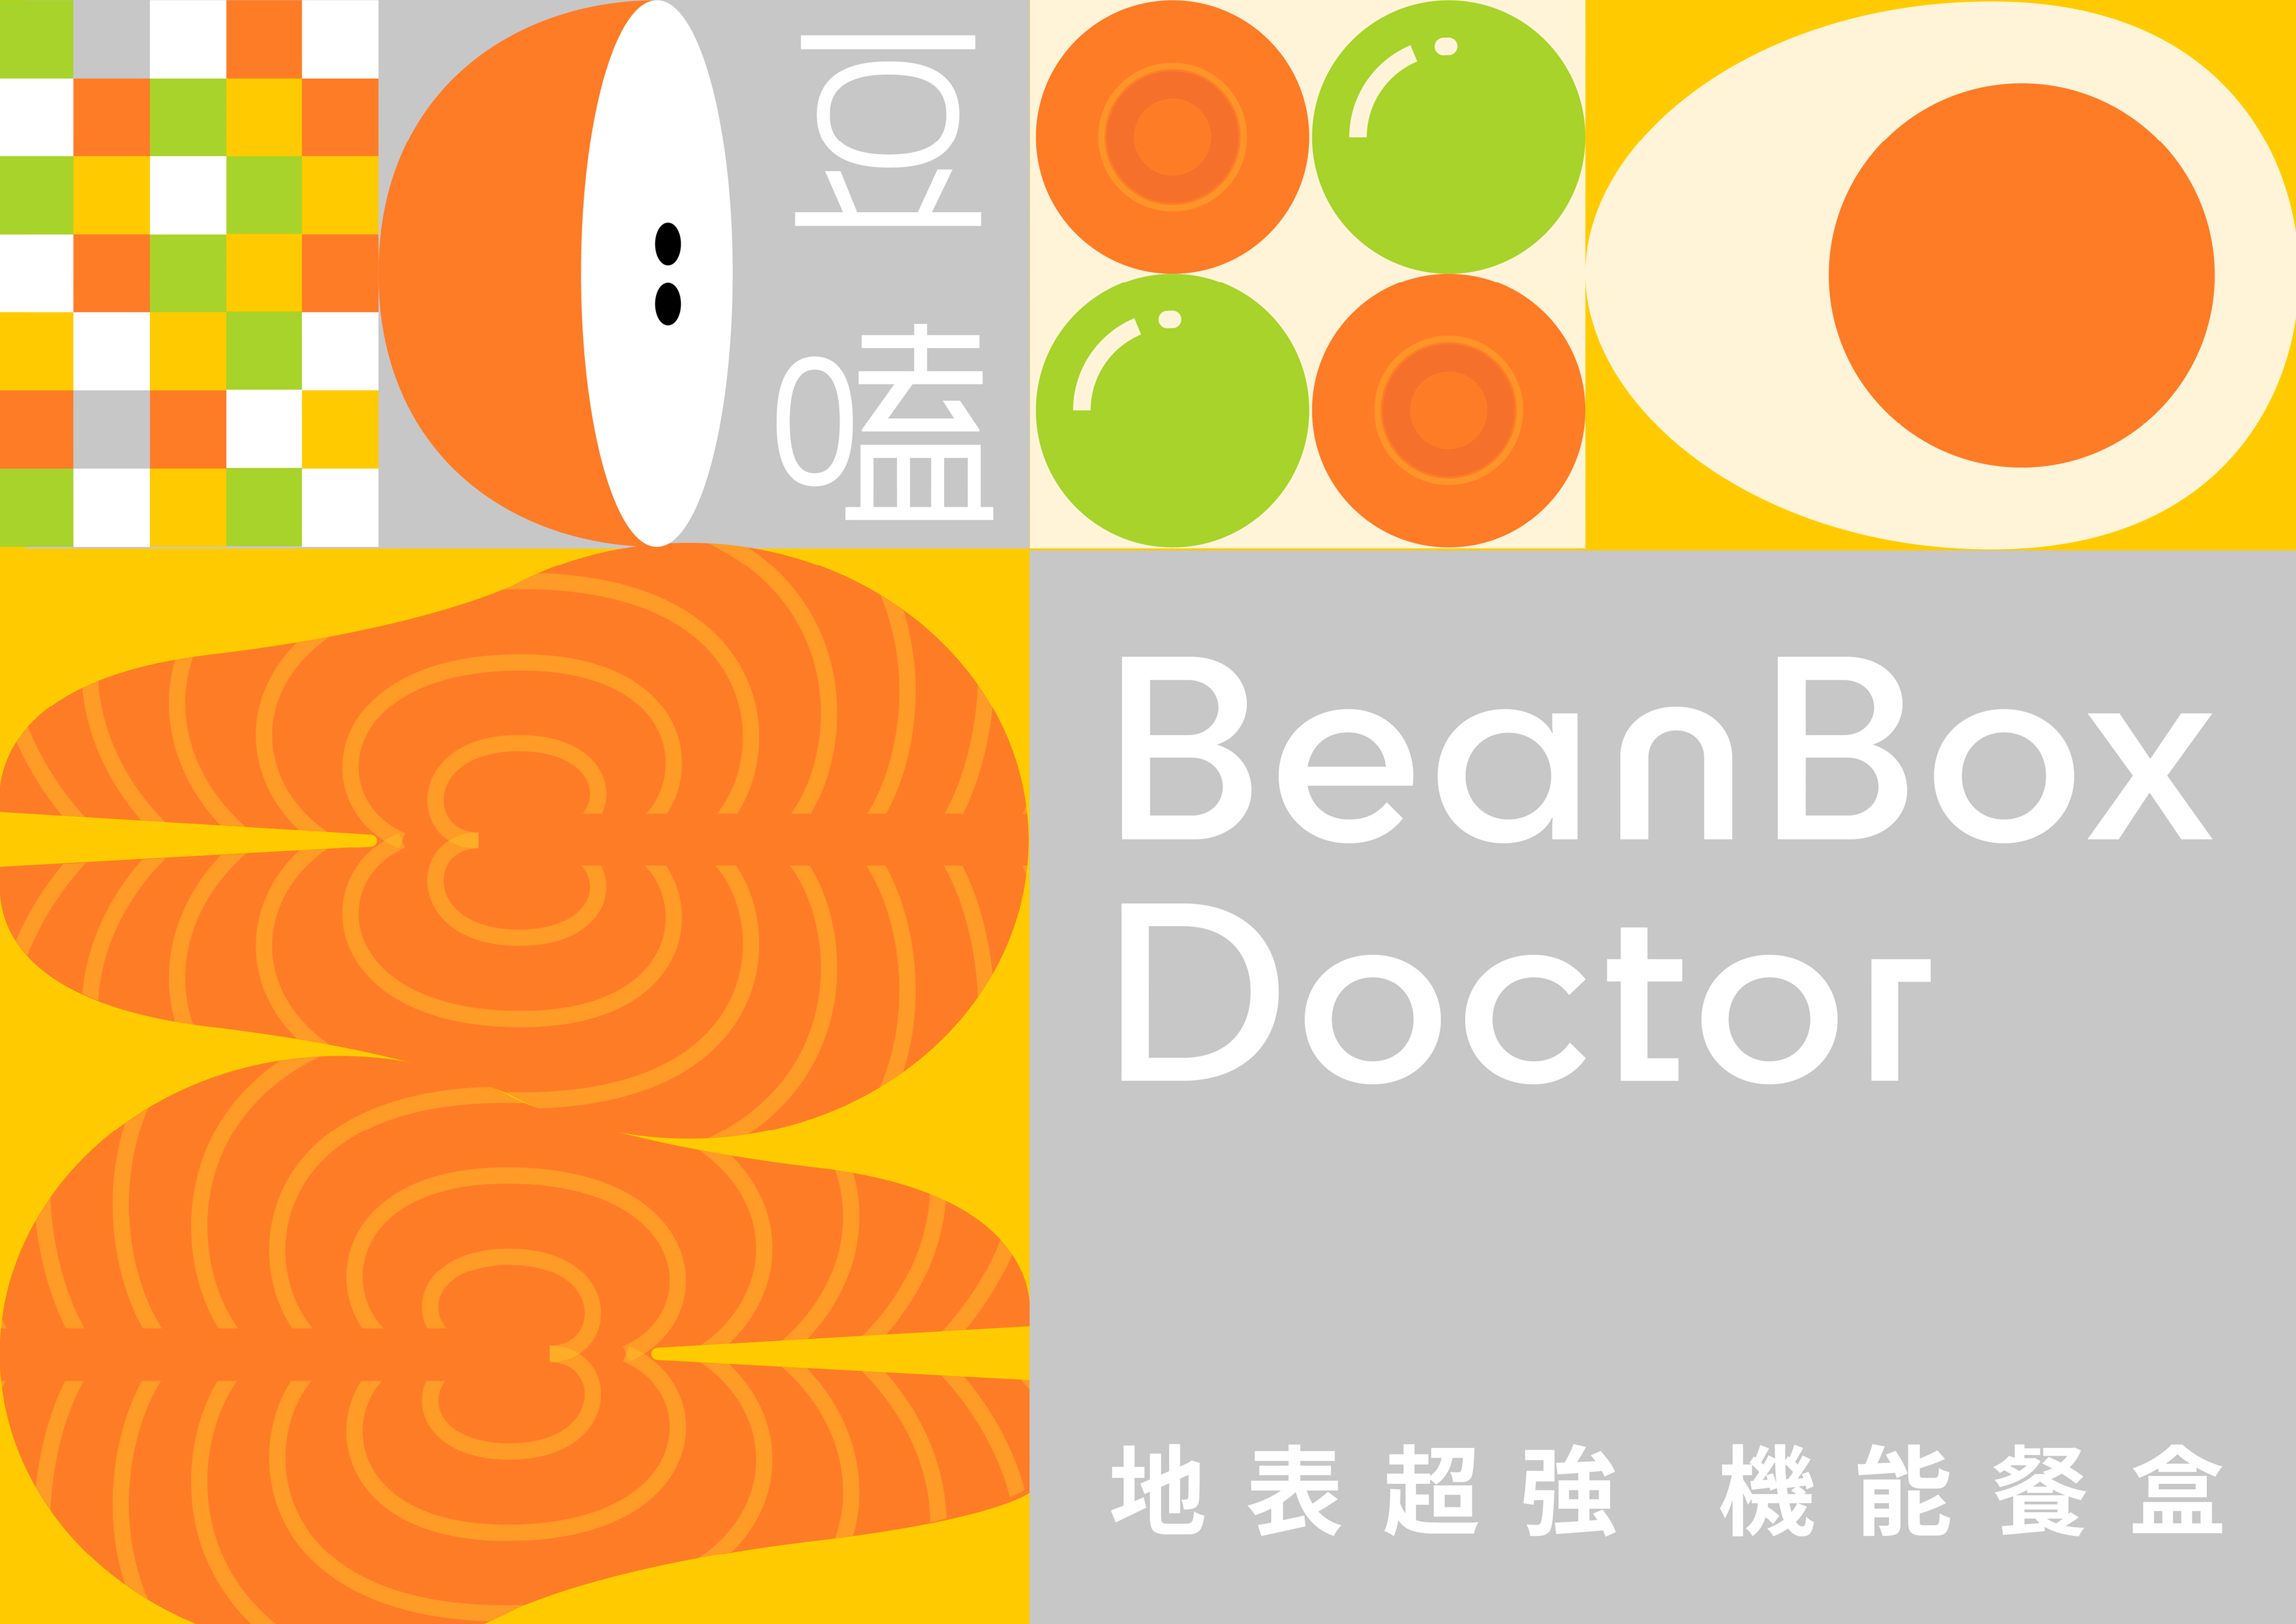 豆嗑 Bean Box Doctor